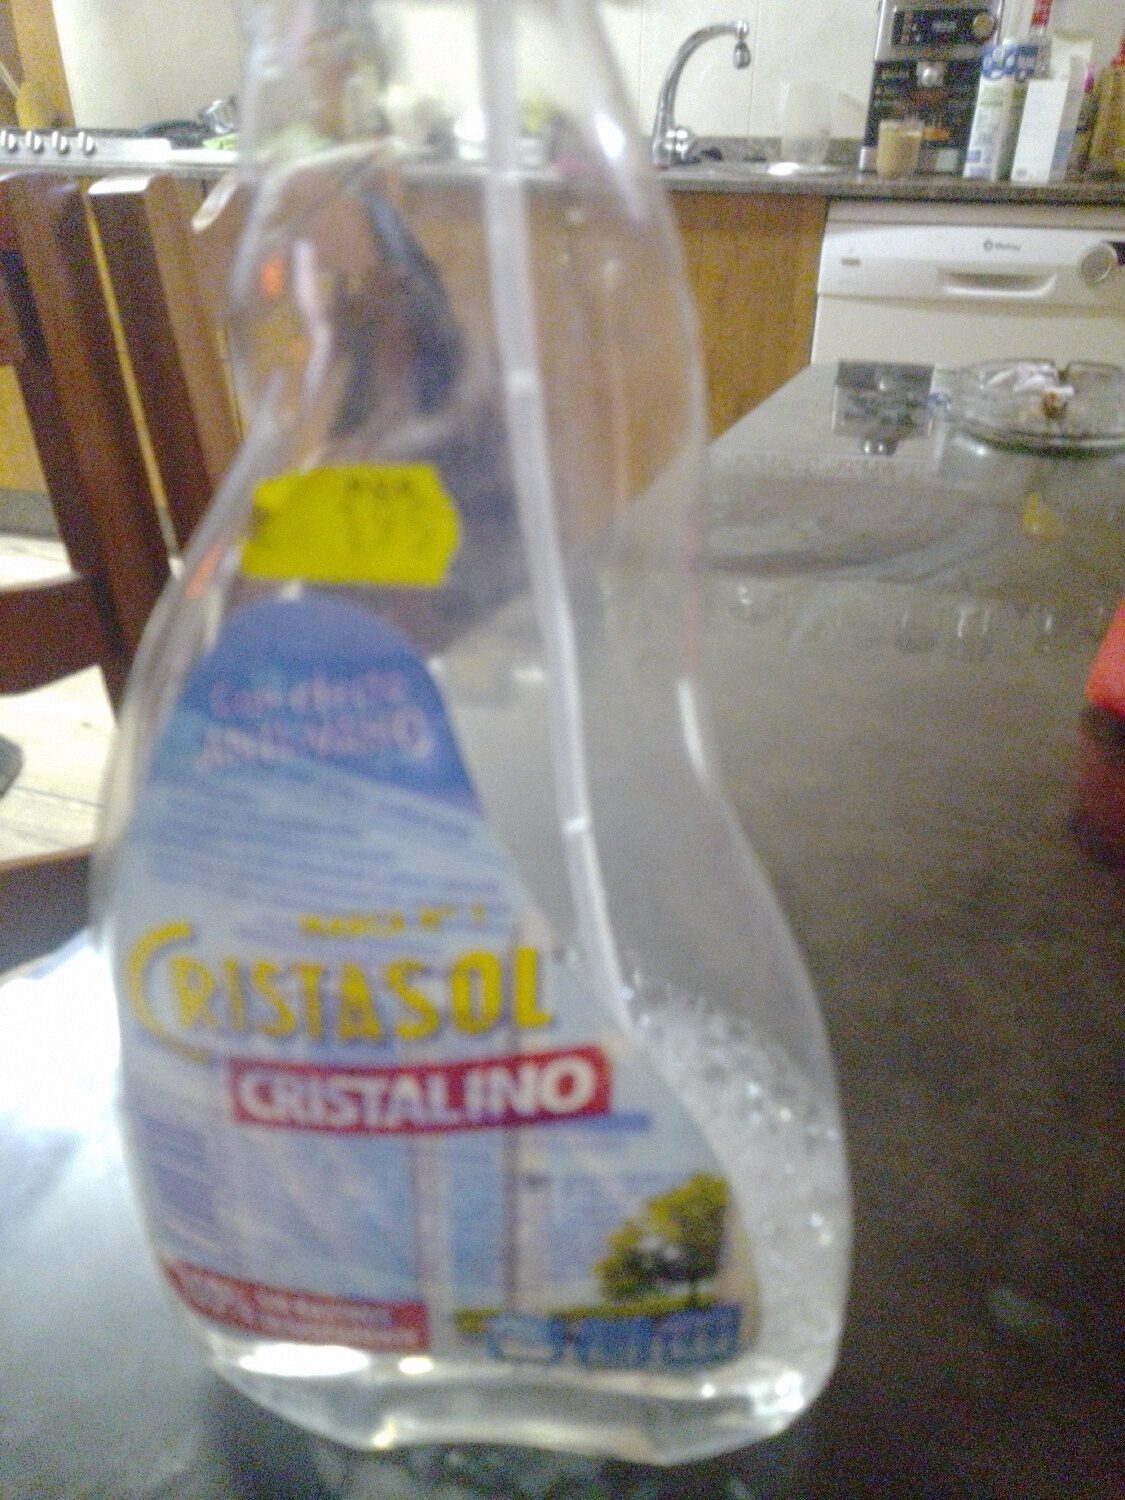 cristasol - Product - xx